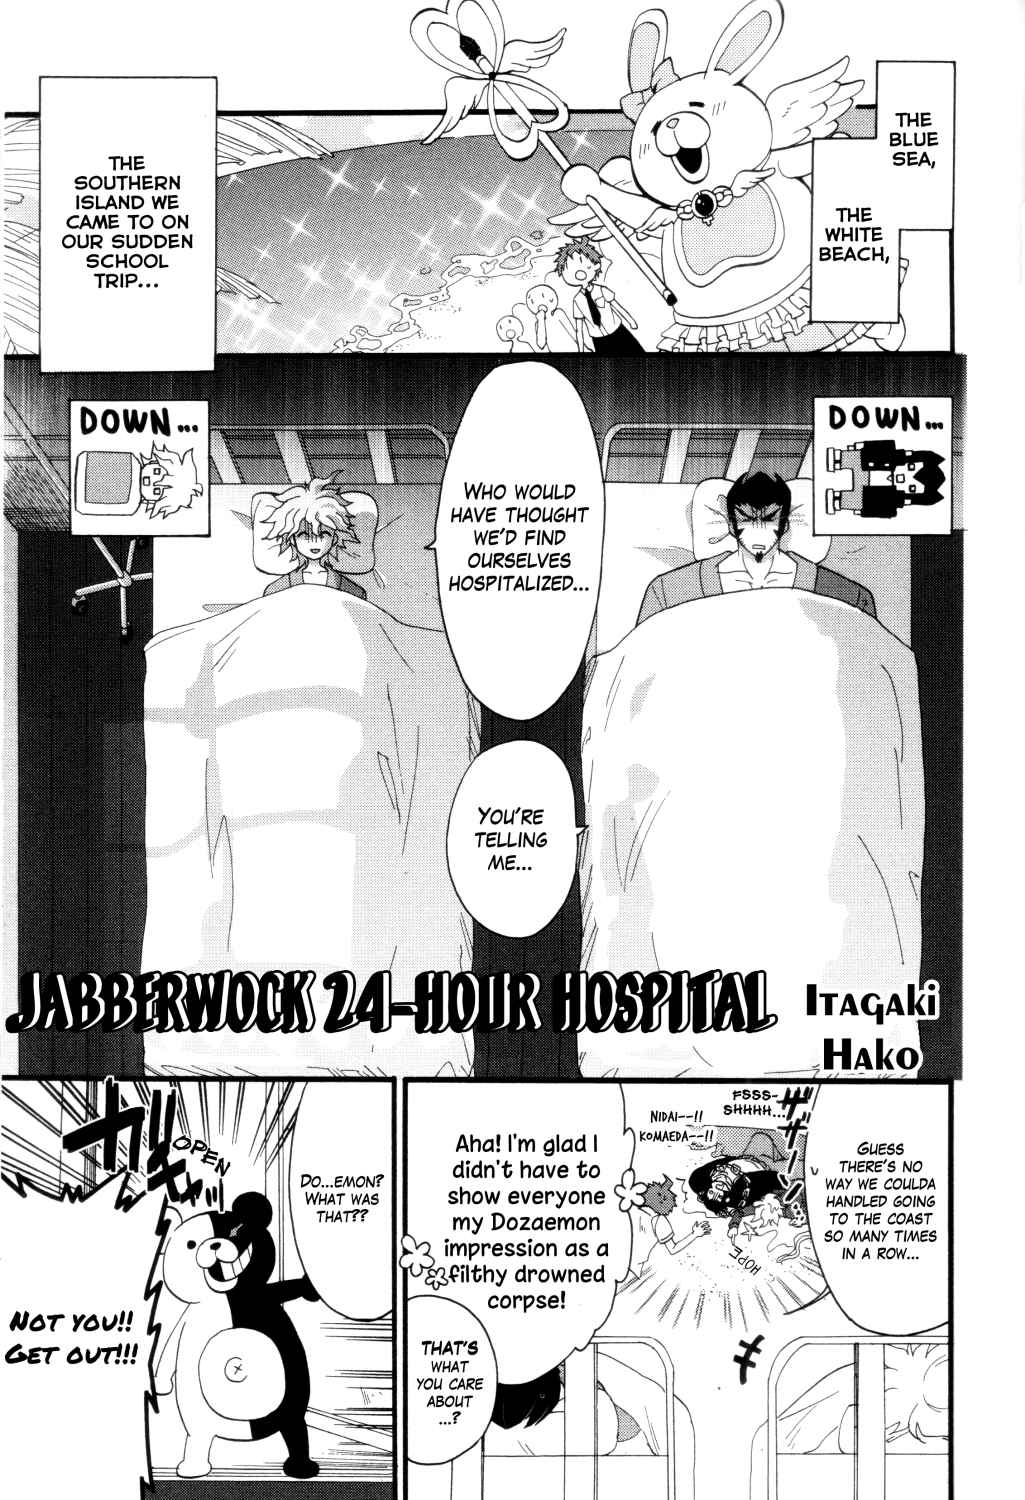 Danganronpa 1&2 Comic Anthology Vol. 1 Ch. 9 Jabberwock 24 Hour Hospital by Itagaki Hako